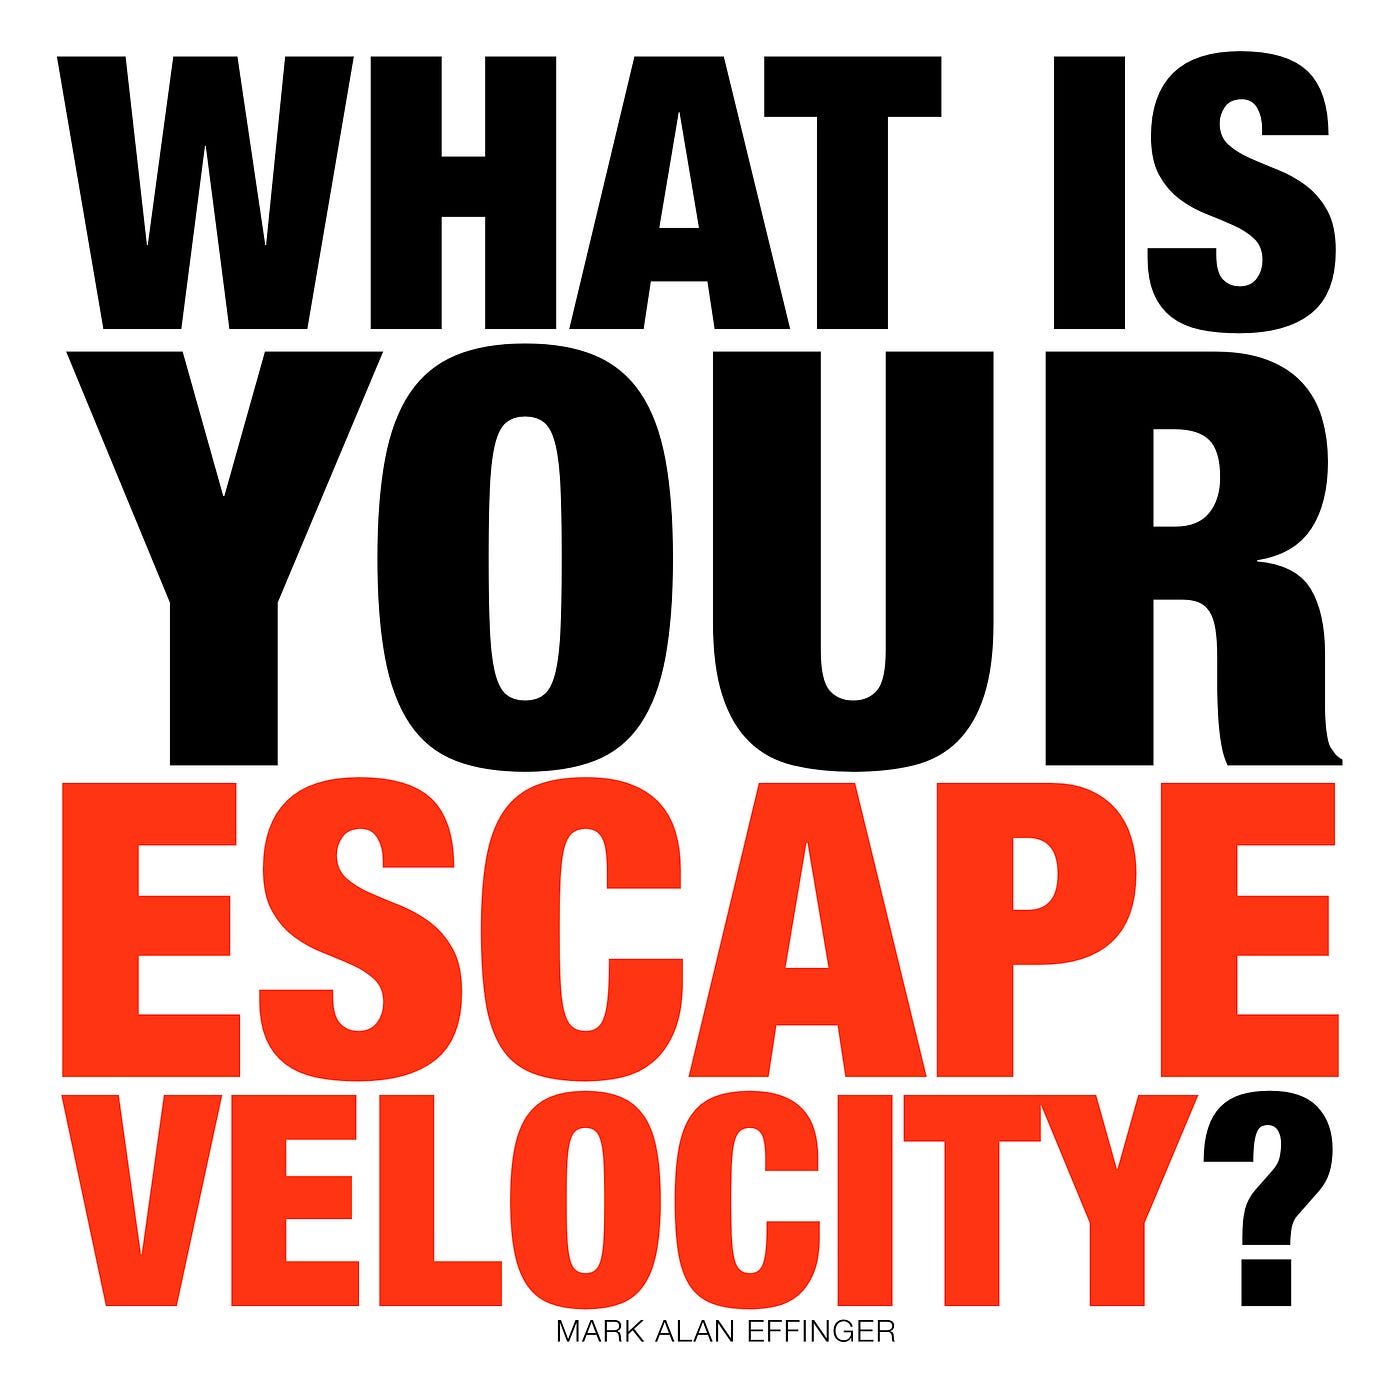 What’s Your Escape Velocity?